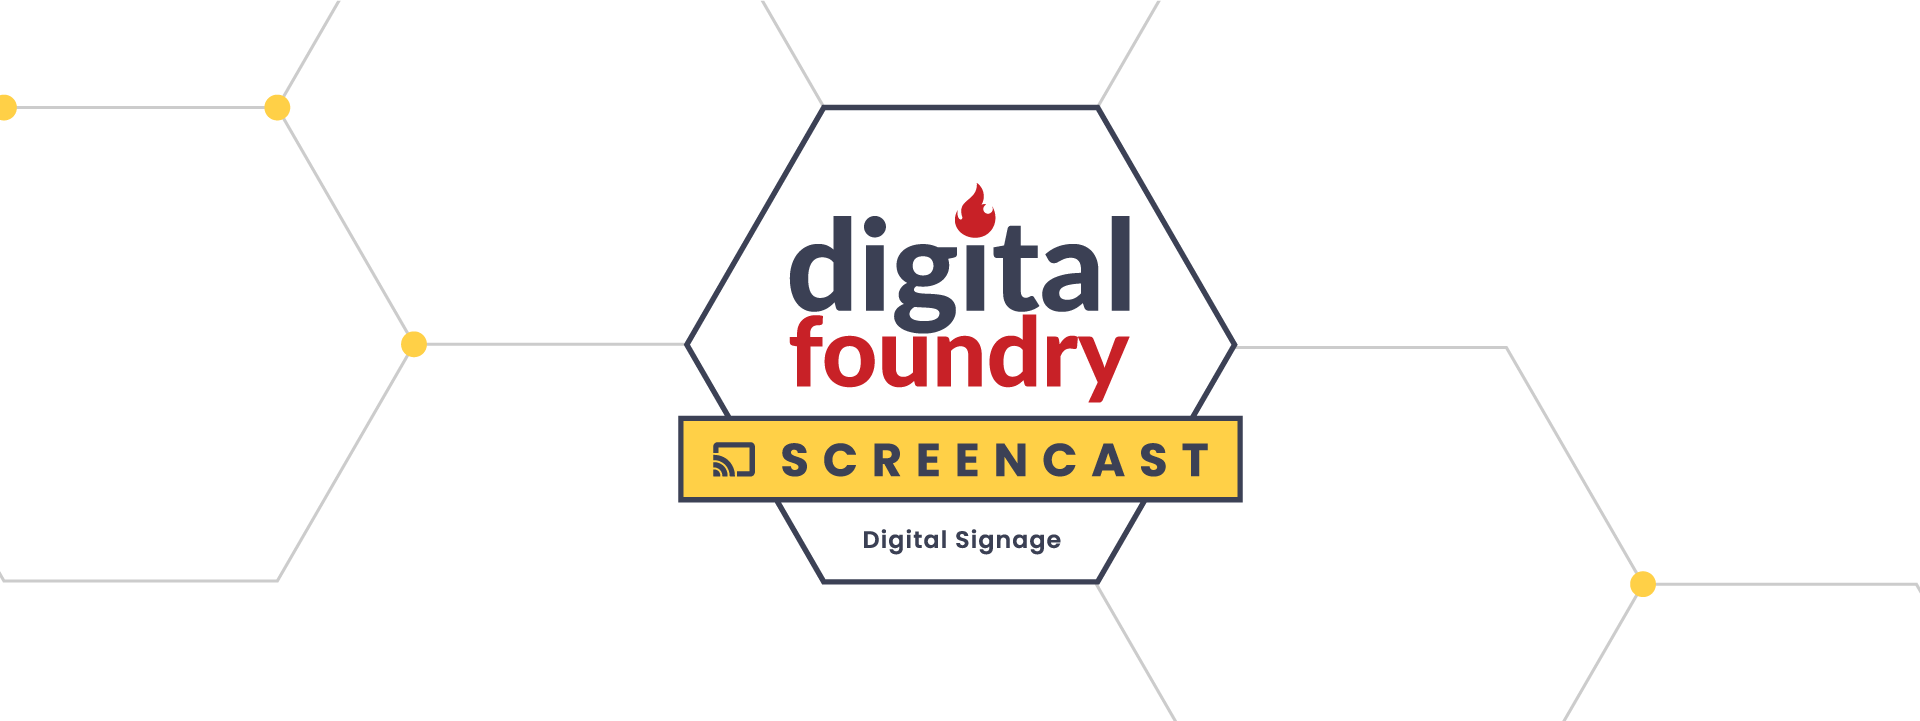 digital-foundry-digital-signage-screencast